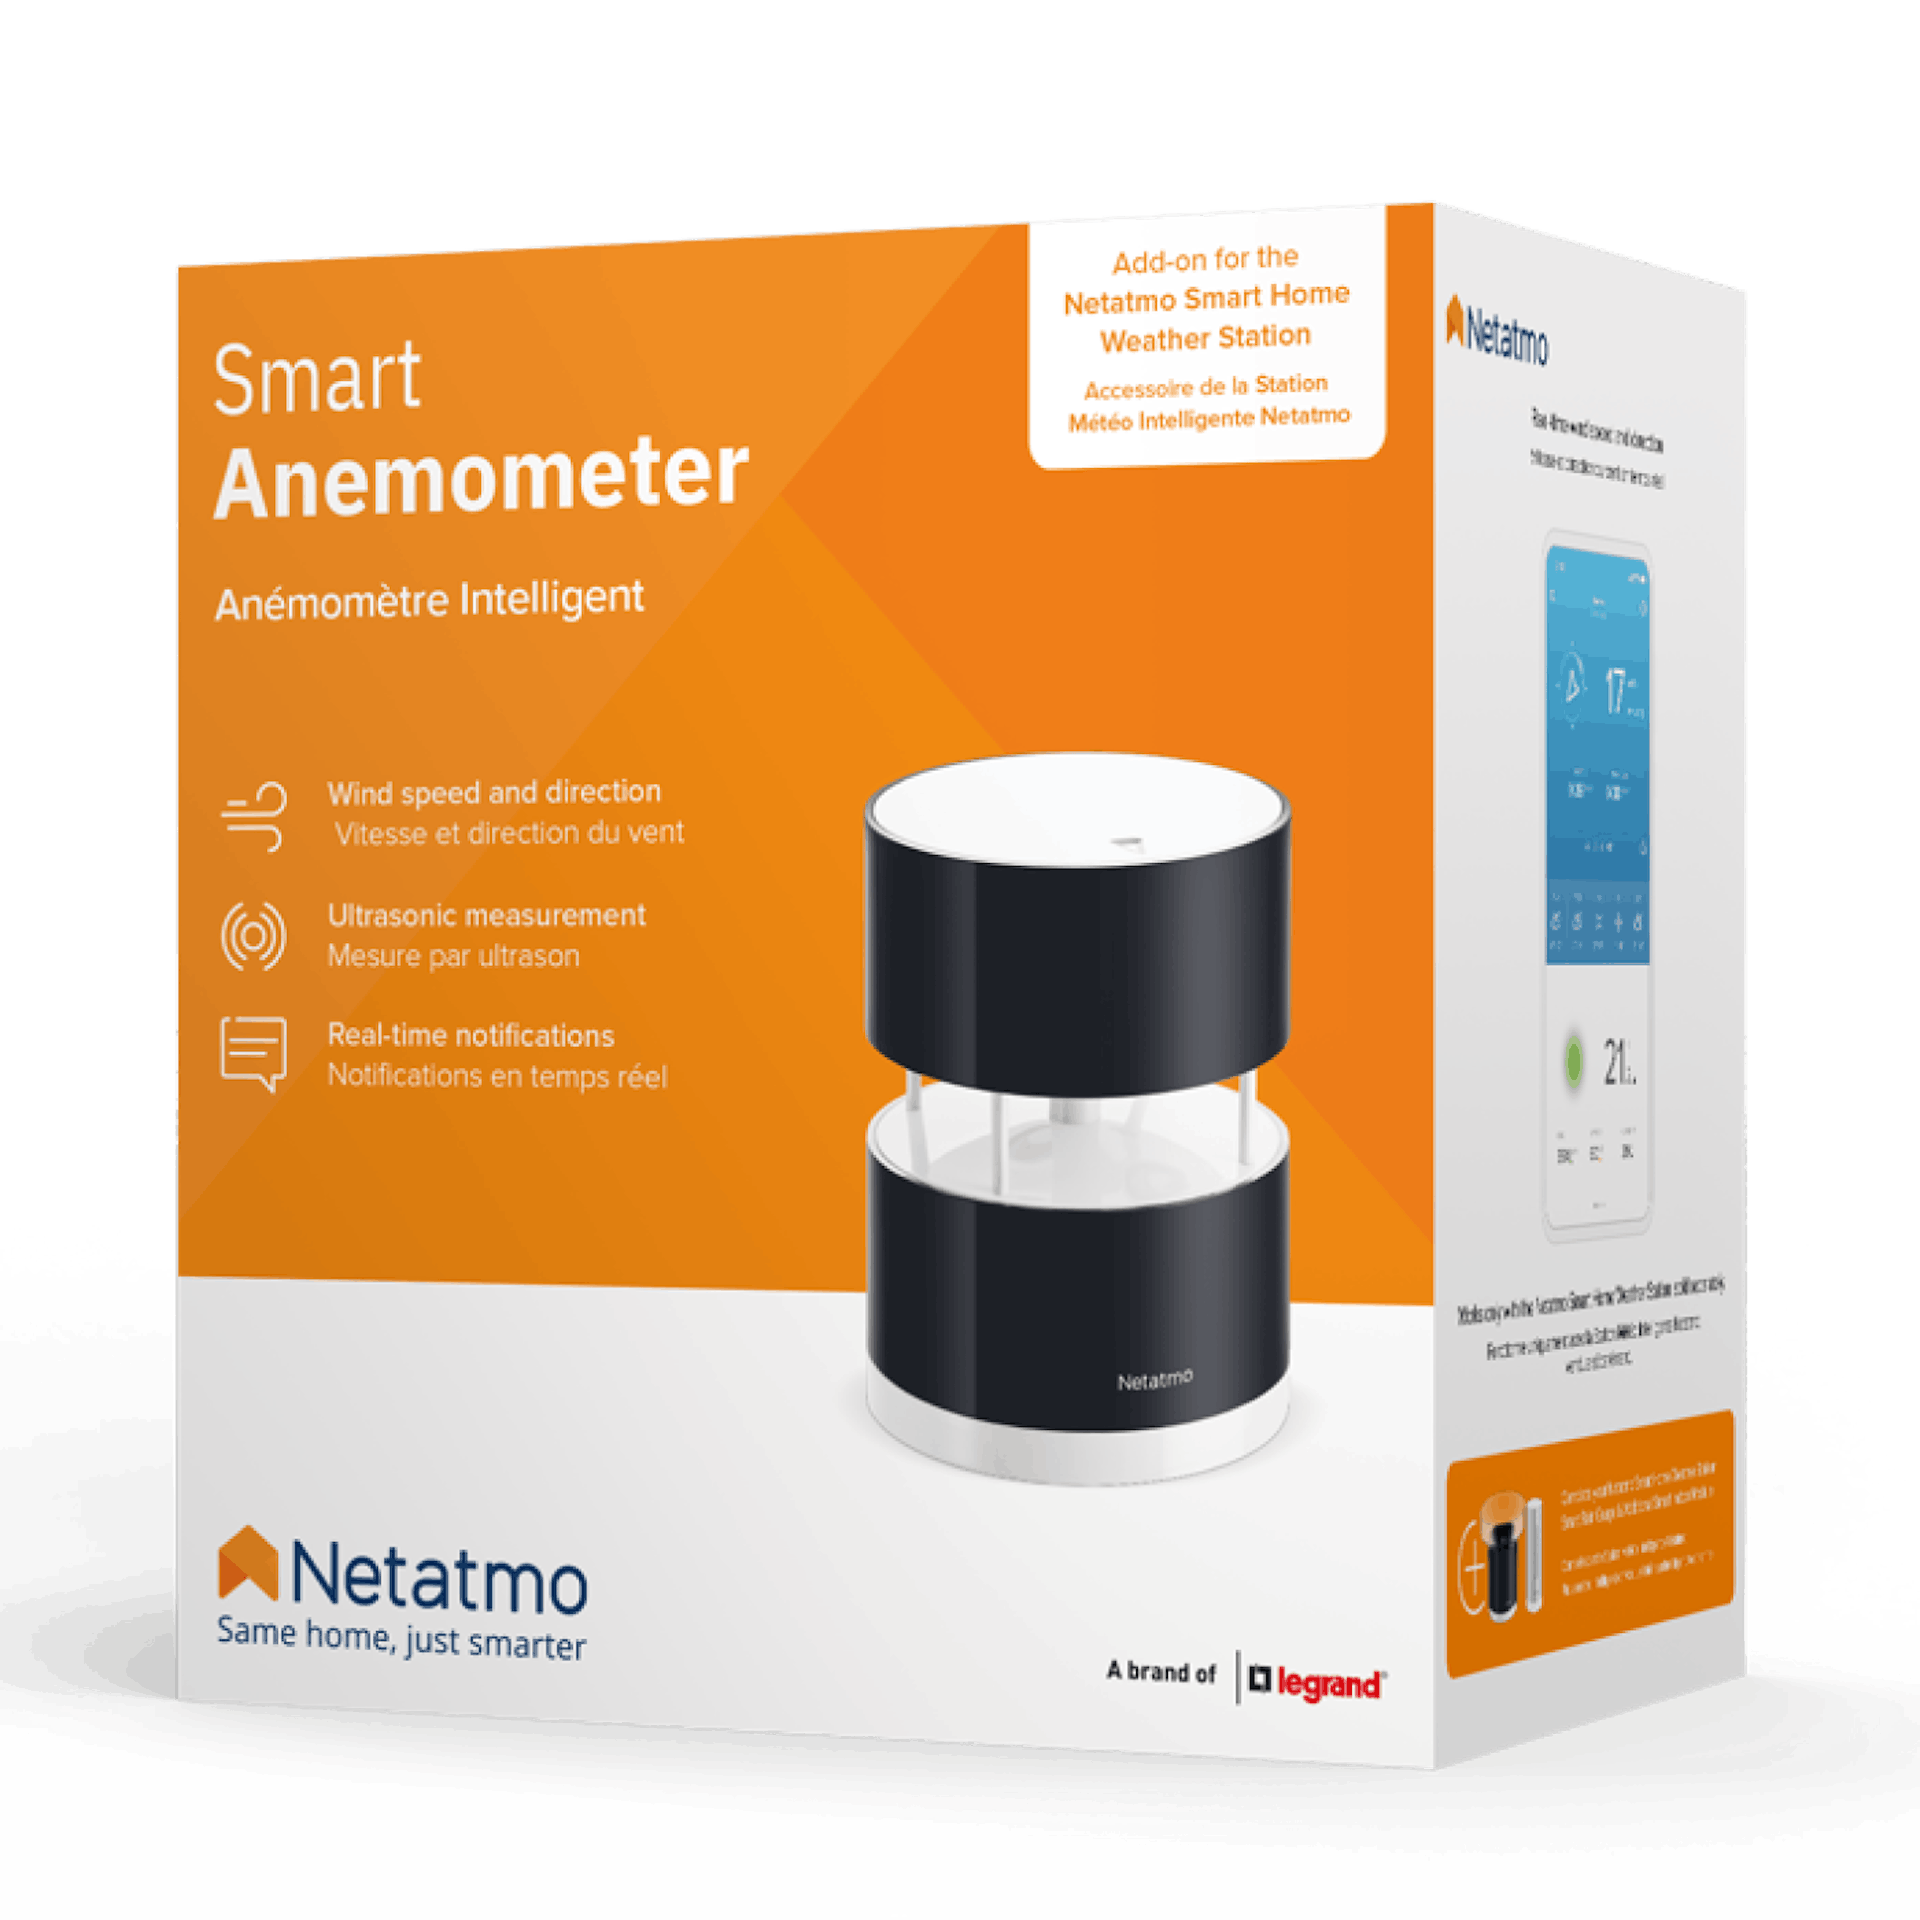 Netatmo Anemometer - Packaging images